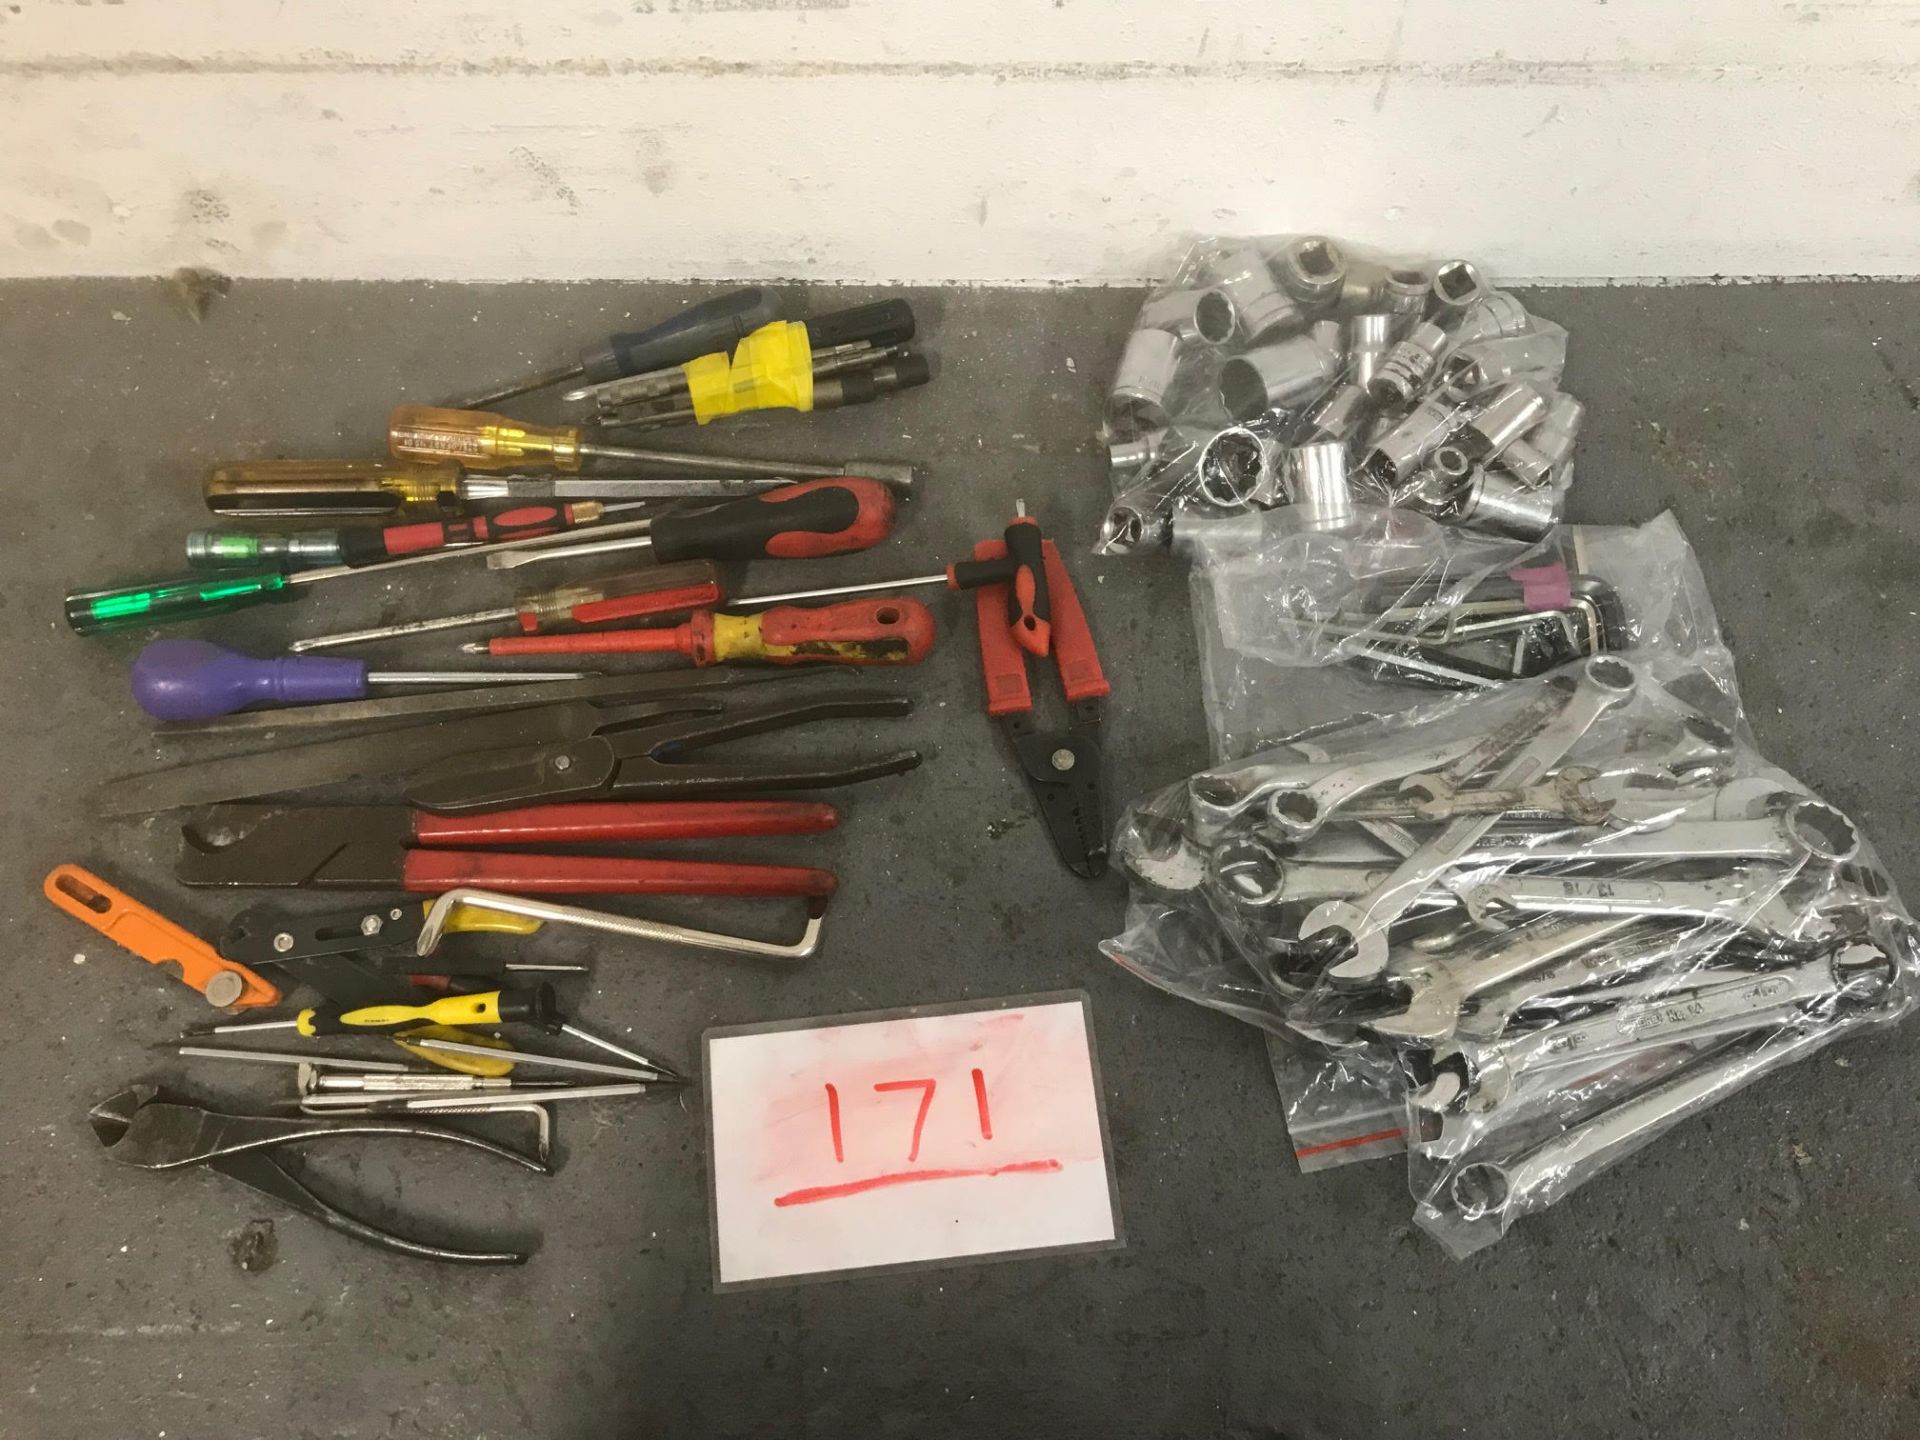 Mixed tools - screwdrivers, snips, files, spanners, sockets, allen keys